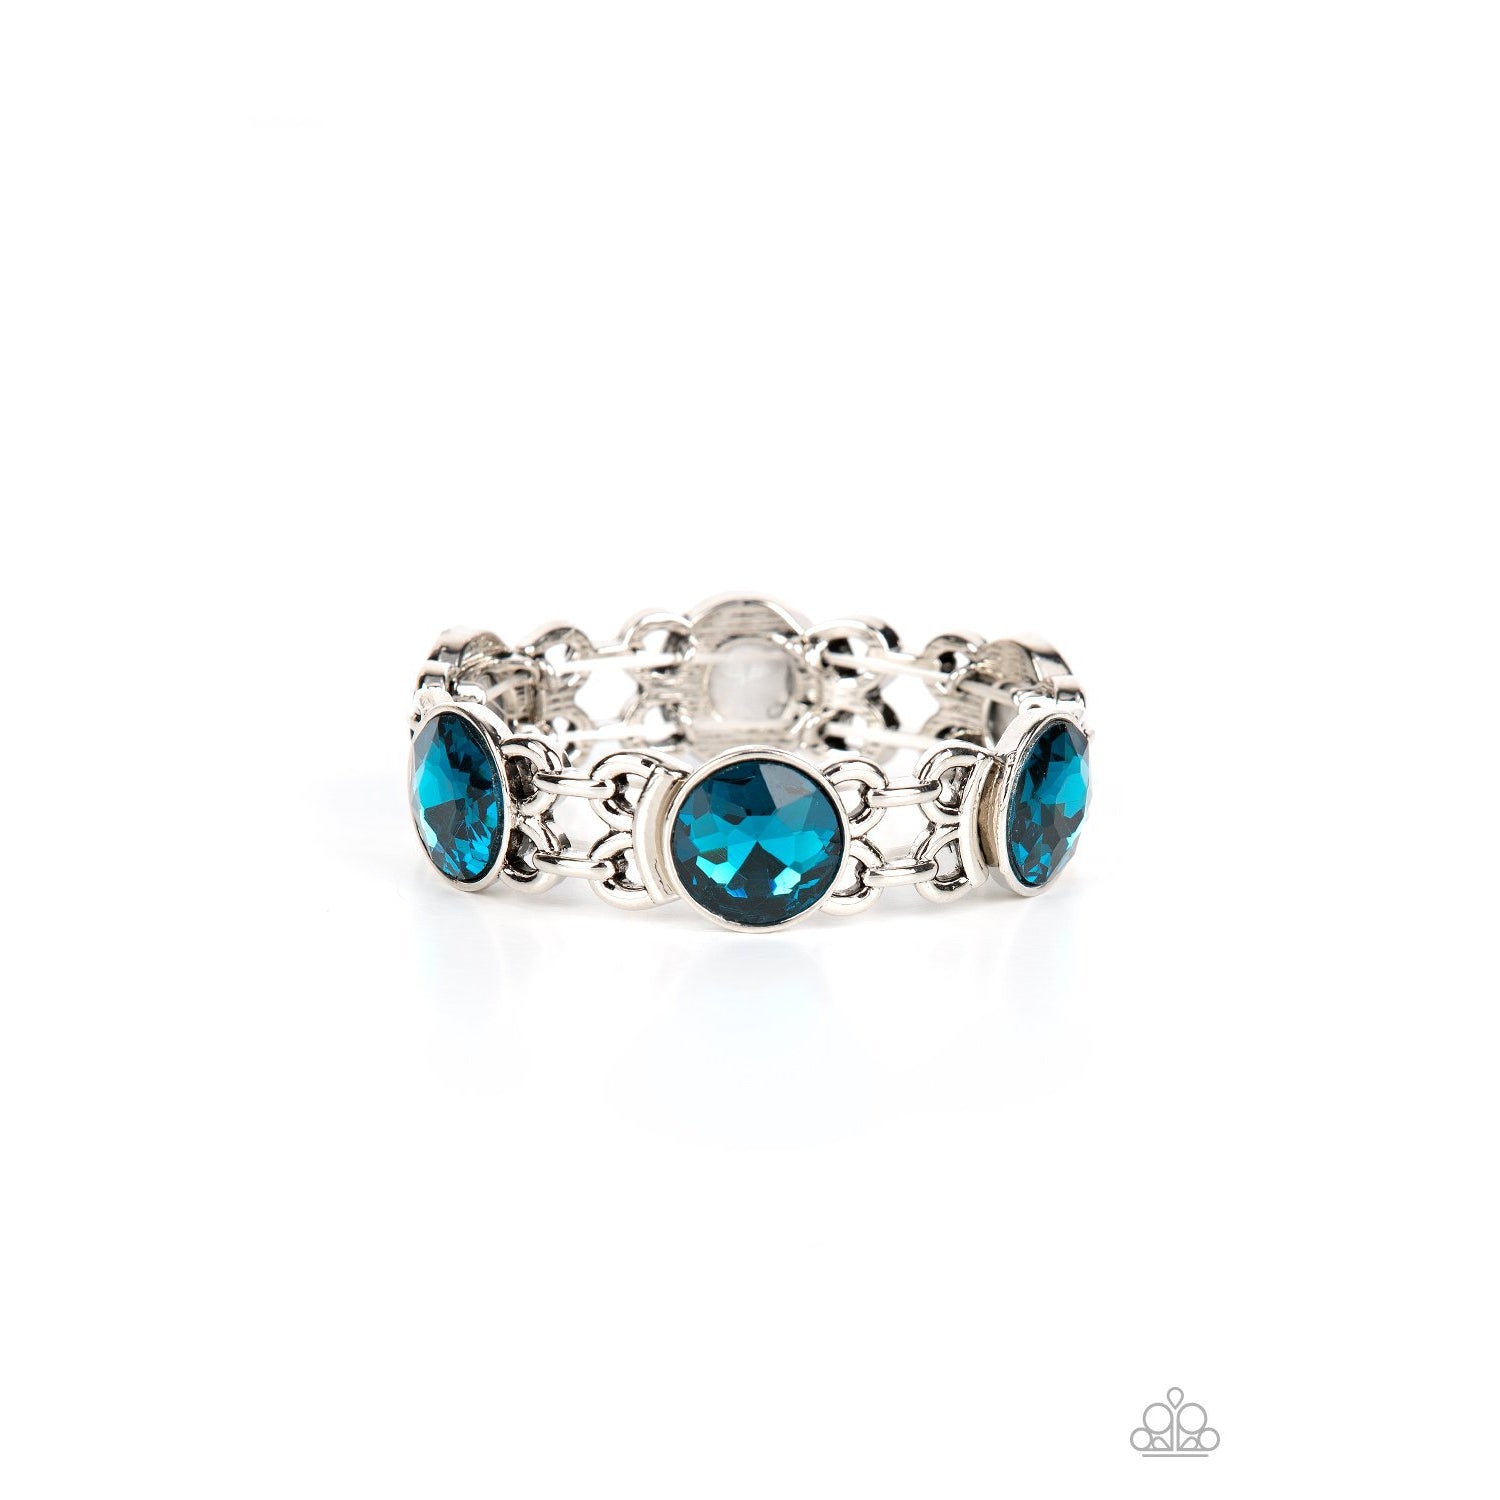 Devoted to Drama - Blue Rhinestone Bracelet - Paparazzi Accessories - GlaMarous Titi Jewels